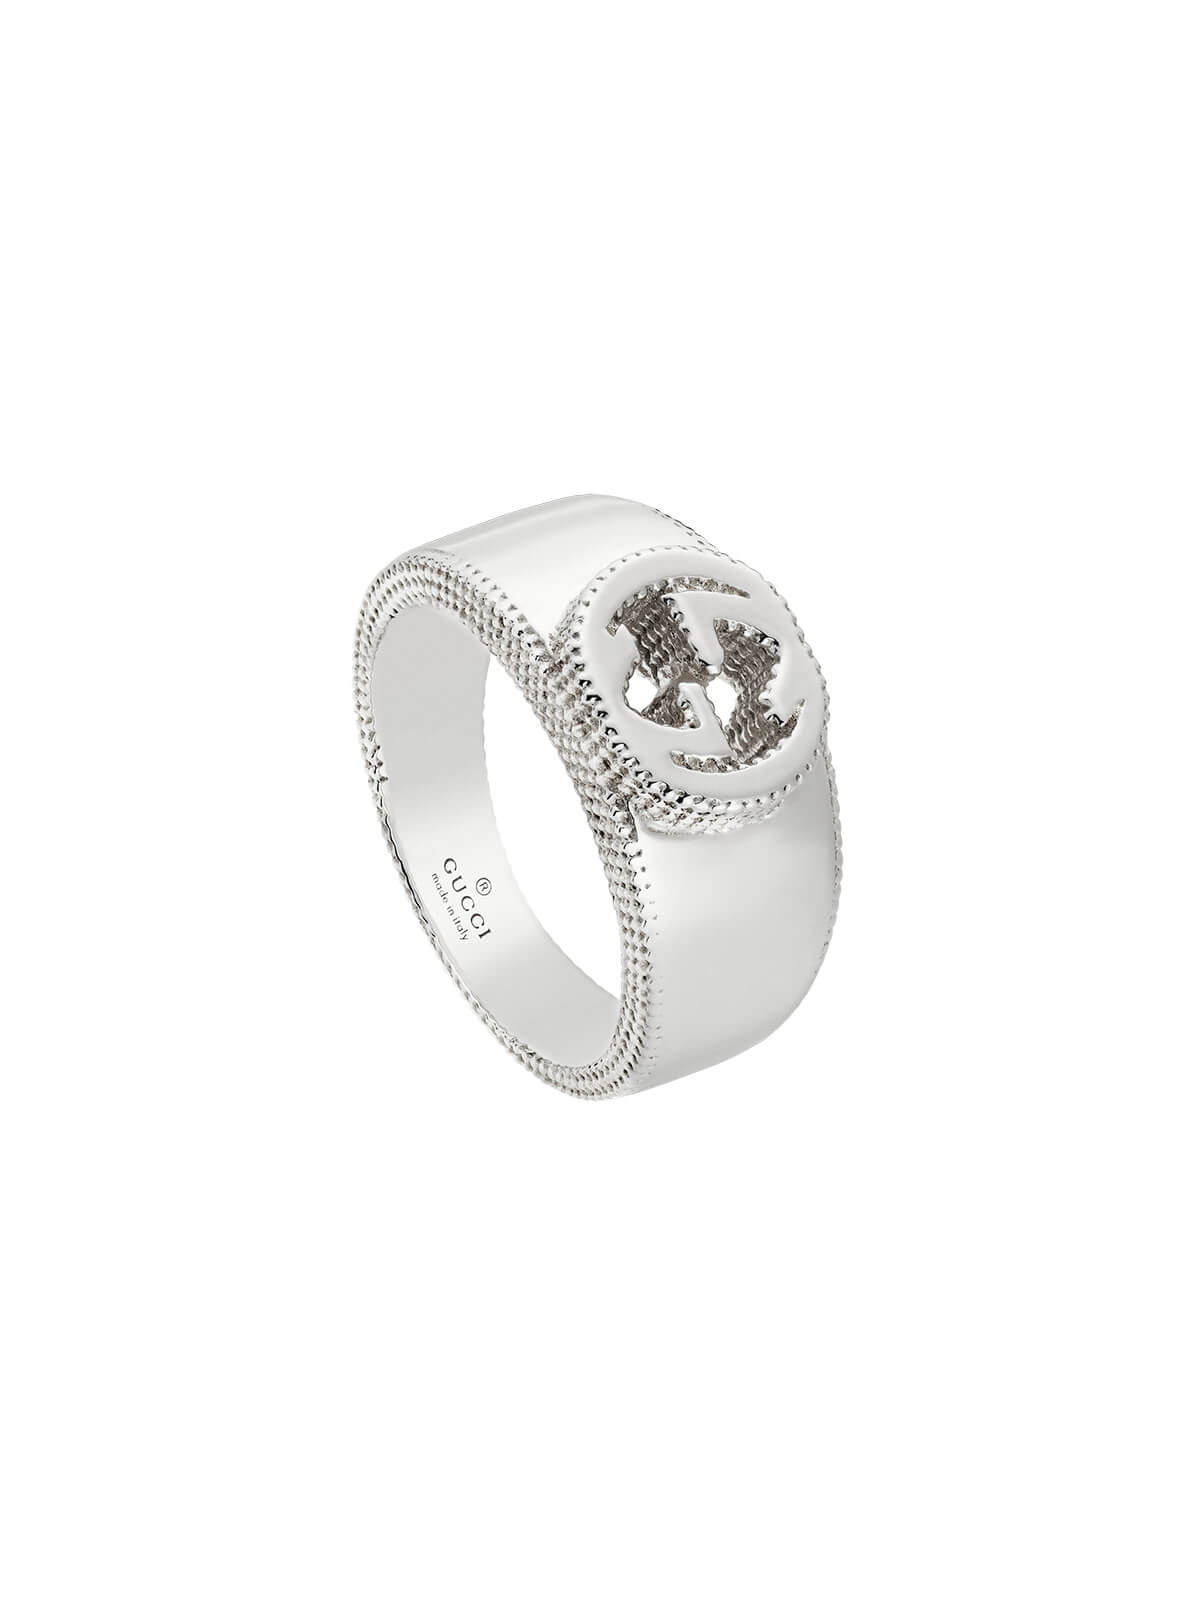 Gucci Interlocking G Ring in Silver - Size Q-R YBC479228001018